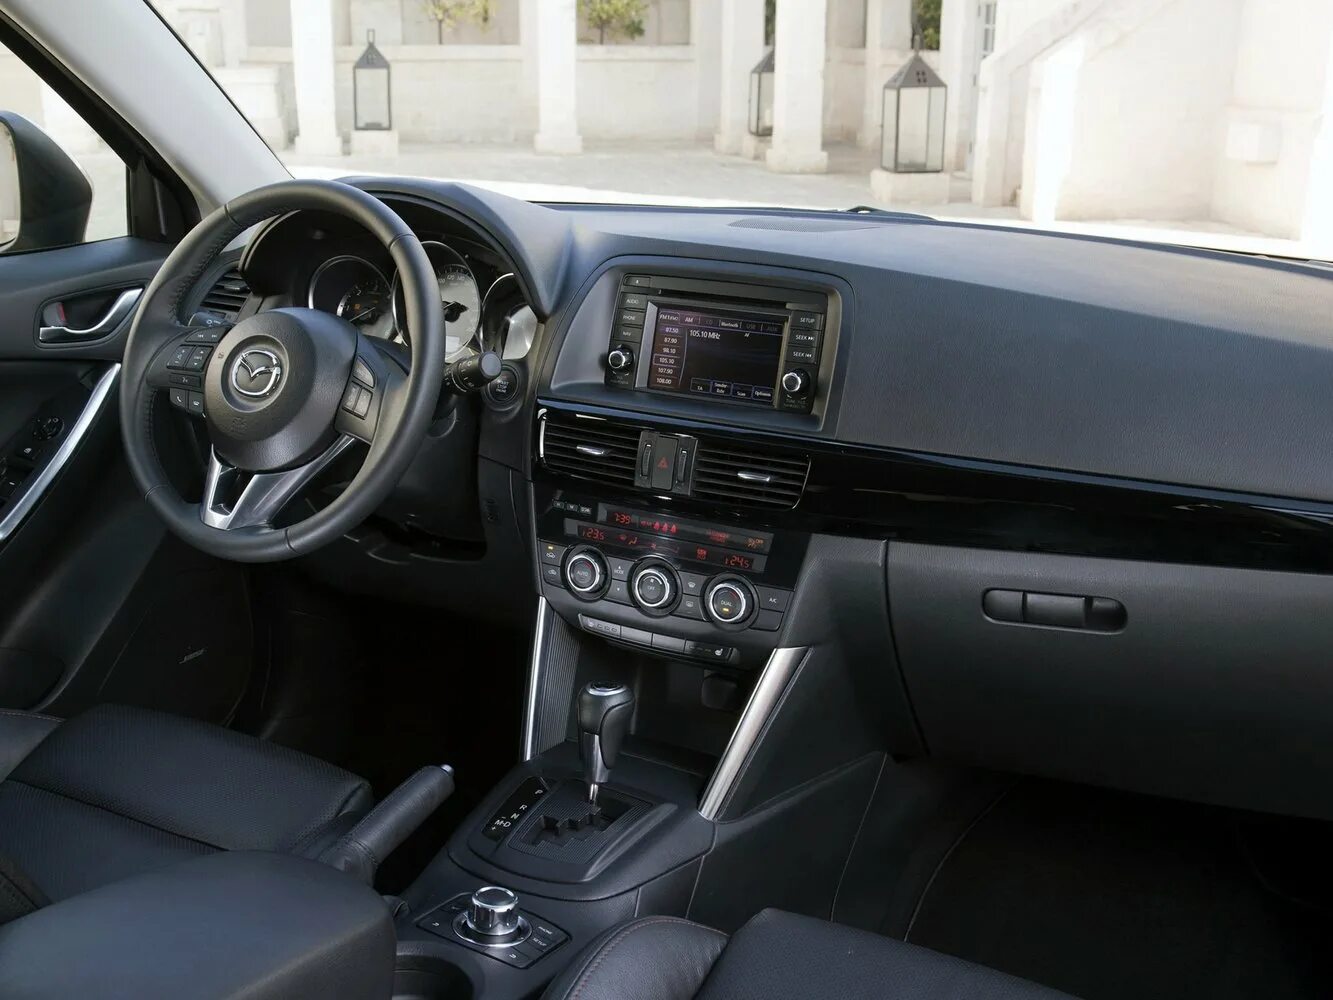 Сх 5 механика. Mazda CX 5 салон. Mazda CX-5 2011. Mazda CX 5 2011 салон. Mazda CX-5 2013.